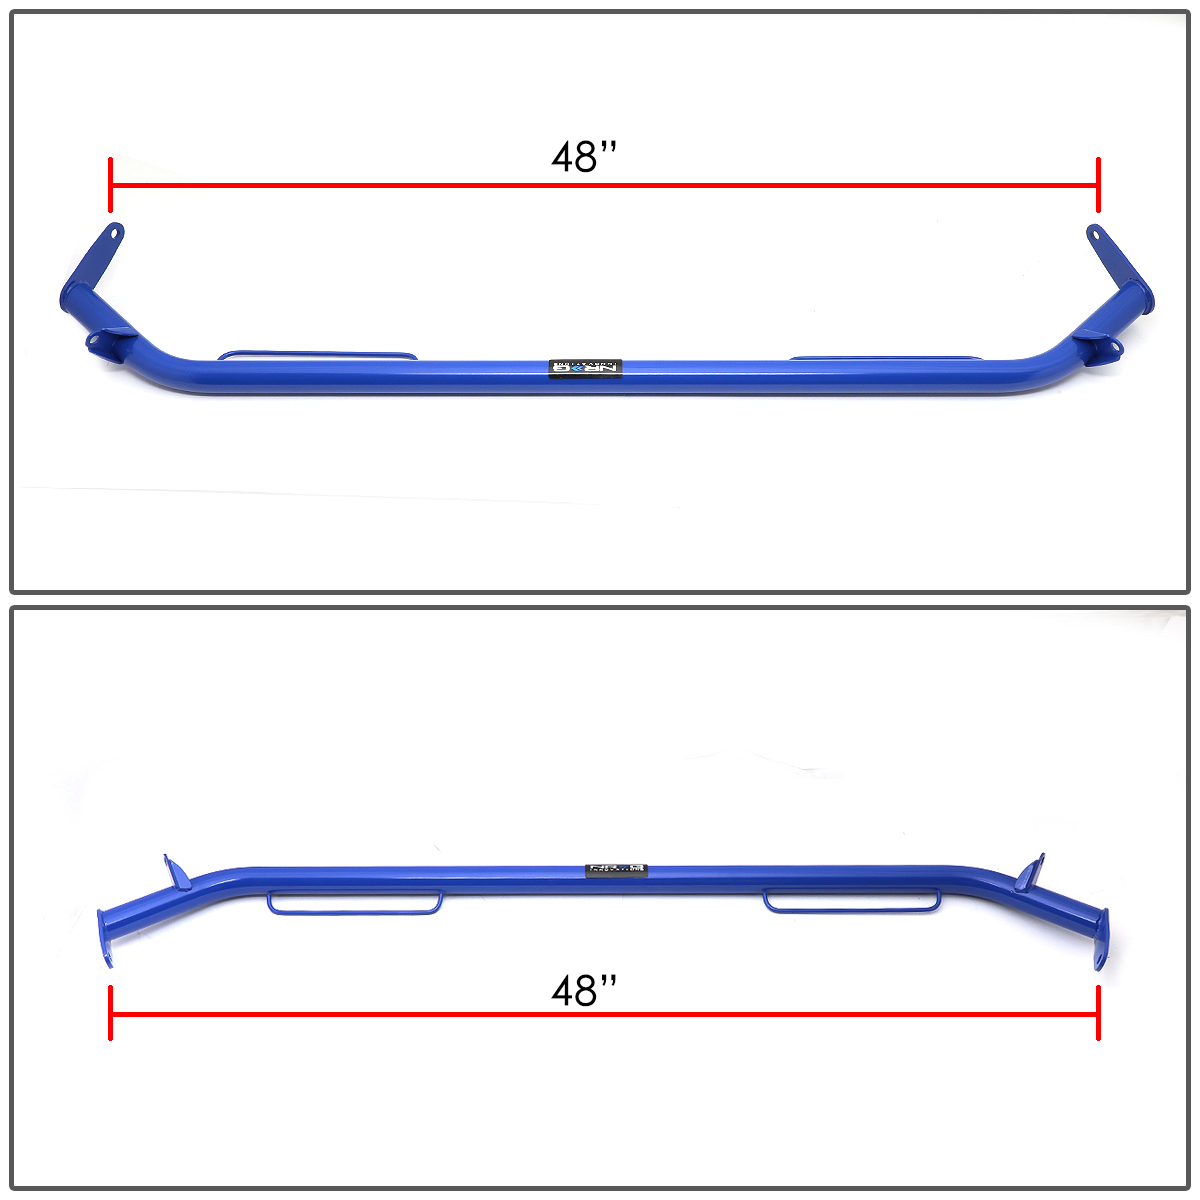 NRG Innovations NRG-HBR-001BL NRG Innovations HBR-001BL 47" Aluminum 4-Point Racing Safety Seat Belt Harness Bar Kit (Blue) - image 5 of 6